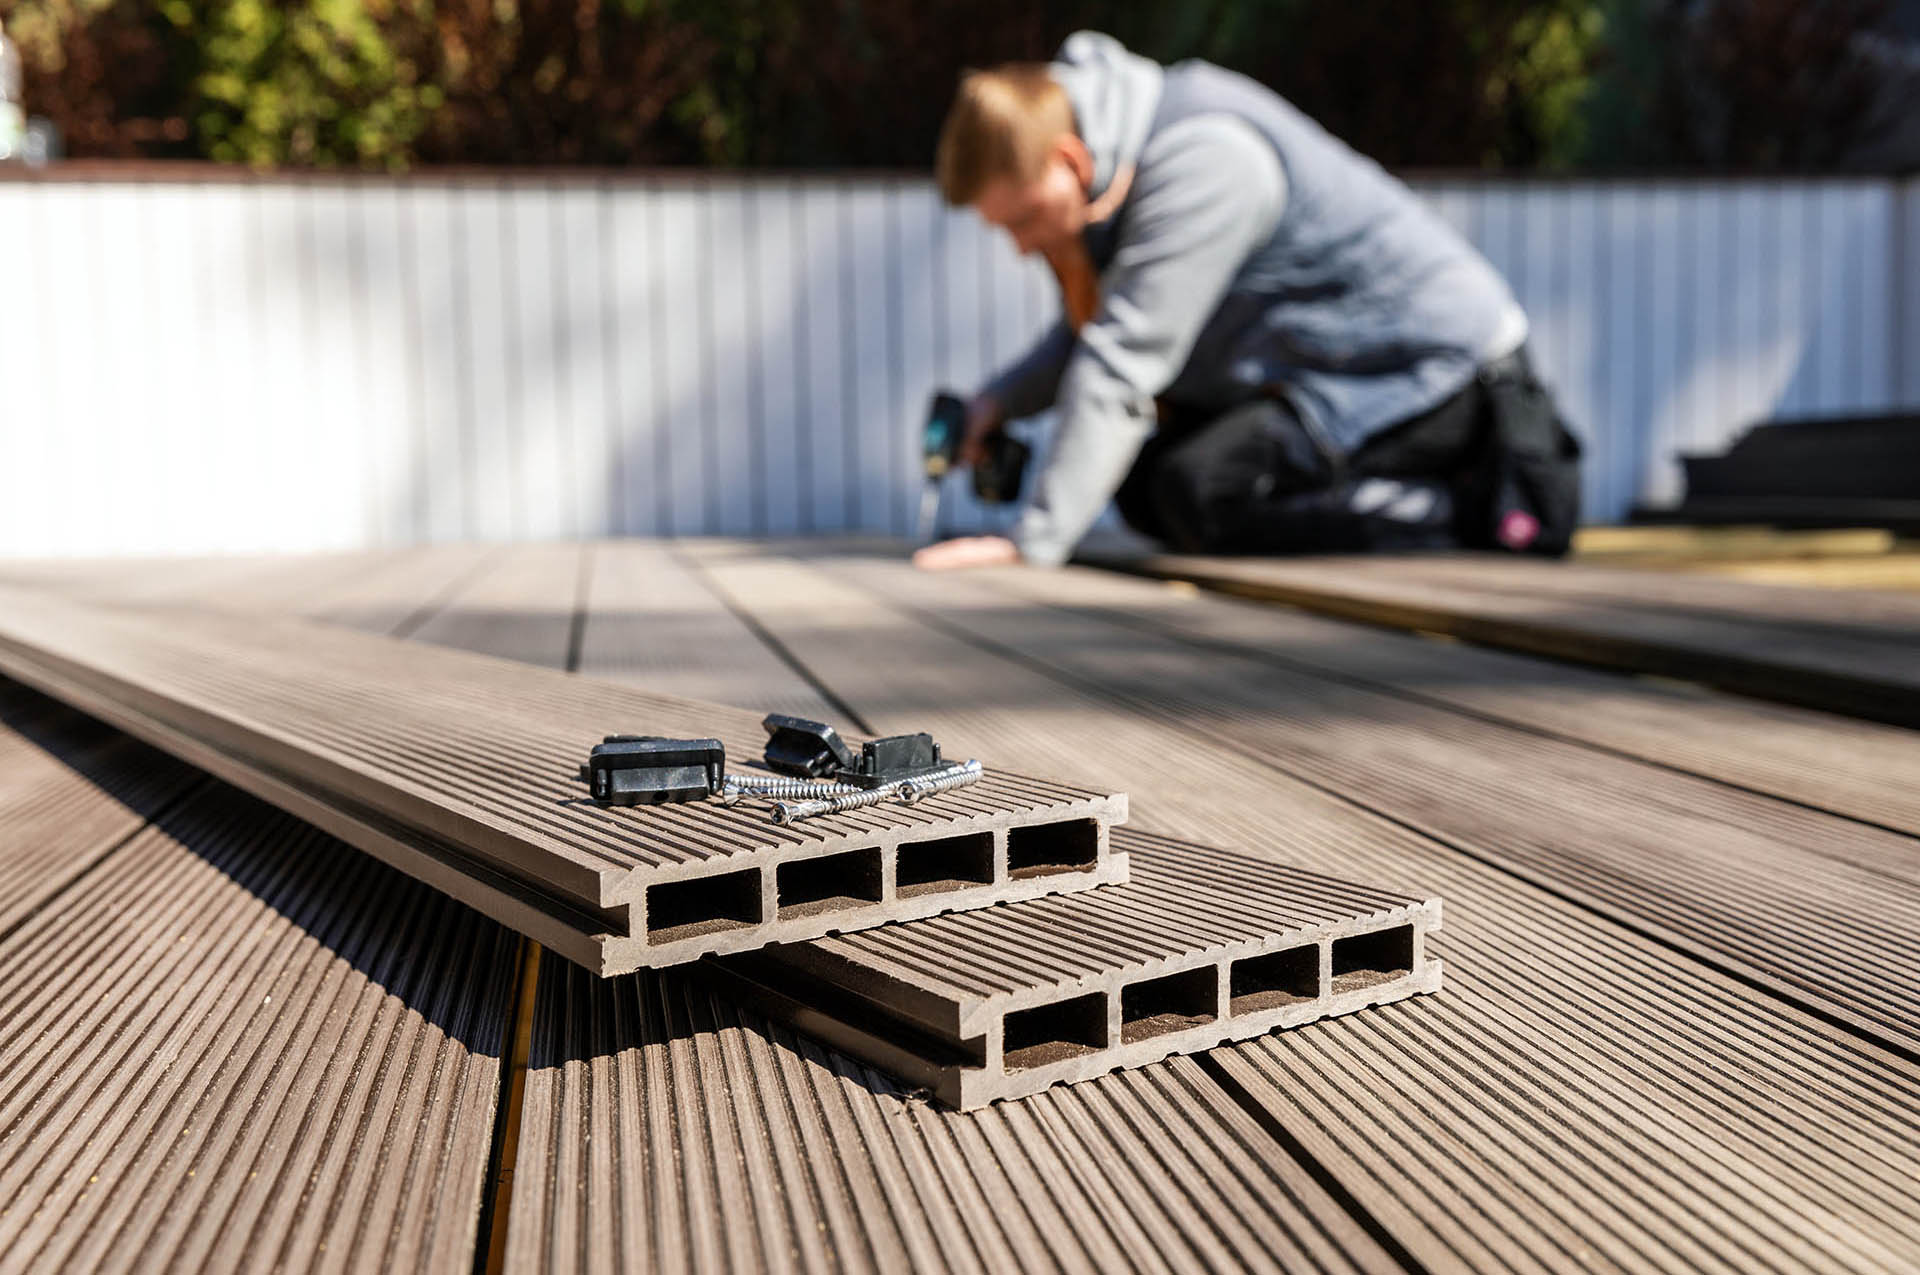 Worker installing wood plastic Cladco composite decking boards - composites alternatives